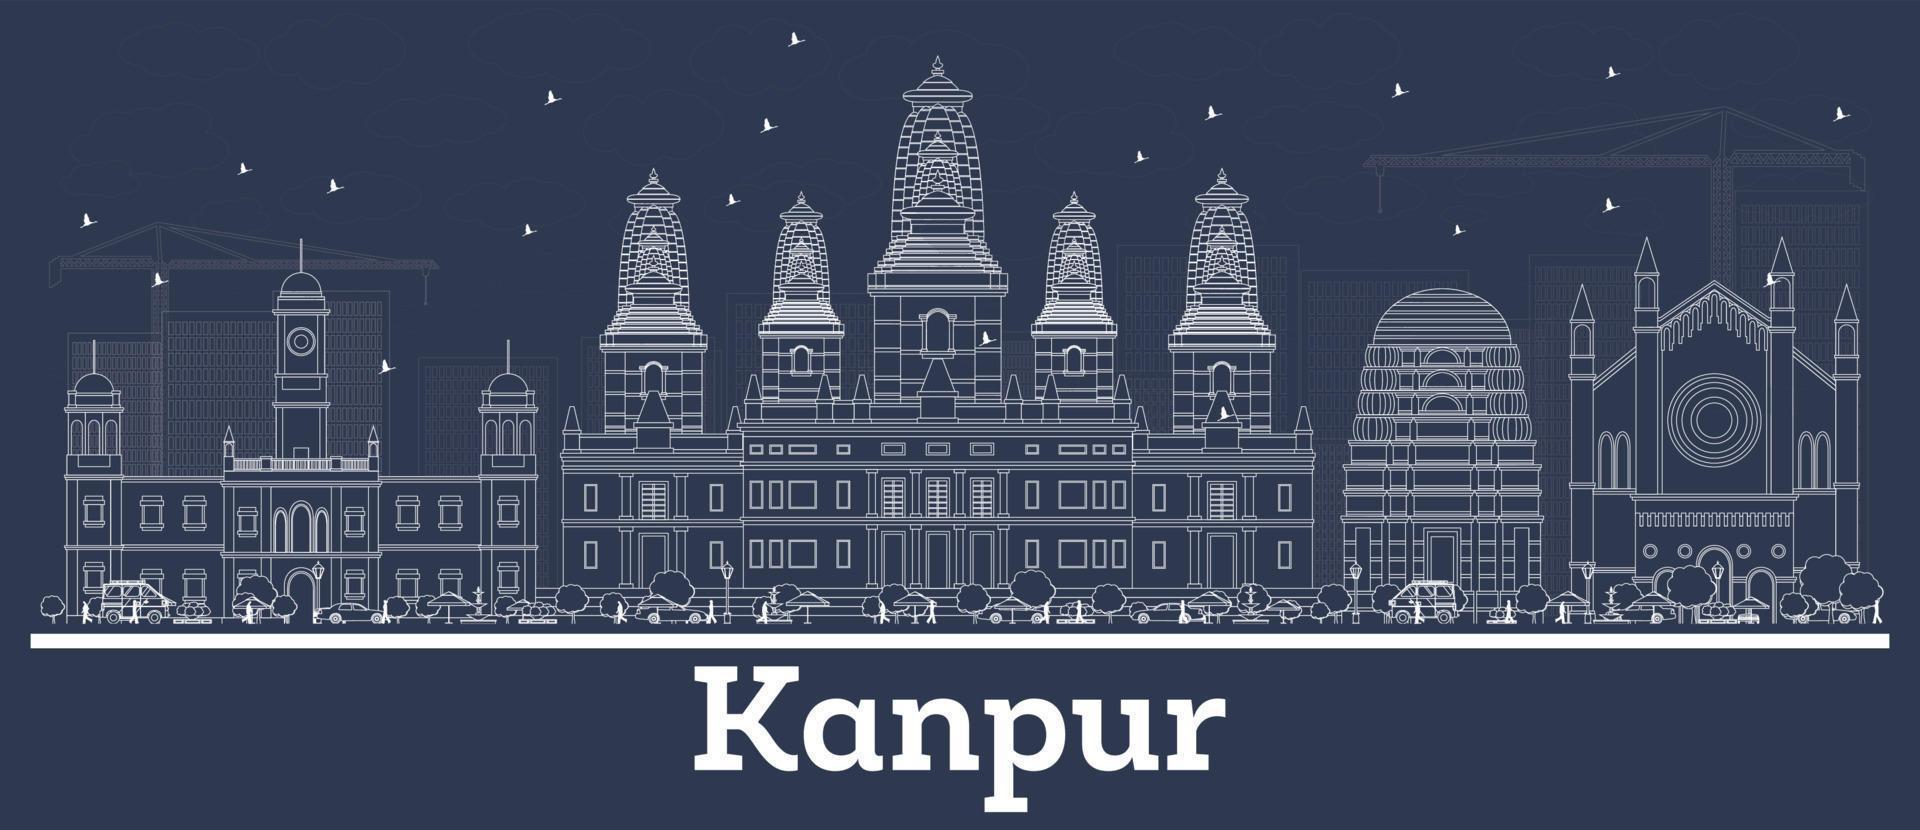 schets kanpur Indië stad horizon met wit gebouwen. vector